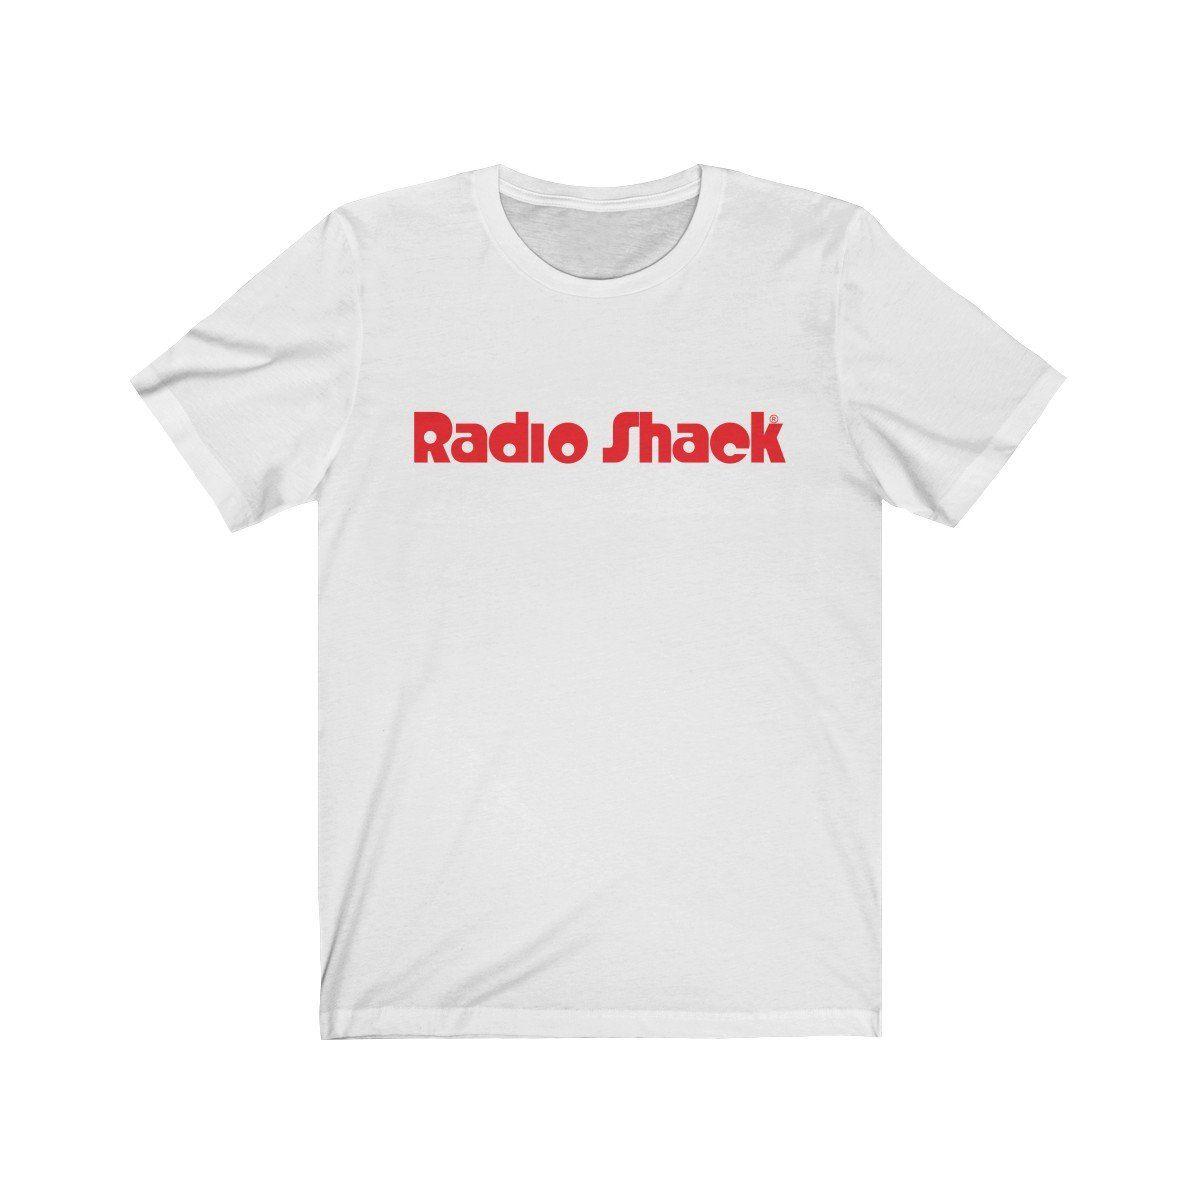 Radio Shack Logo - Retro RadioShack T Shirt With Horizontal Logo